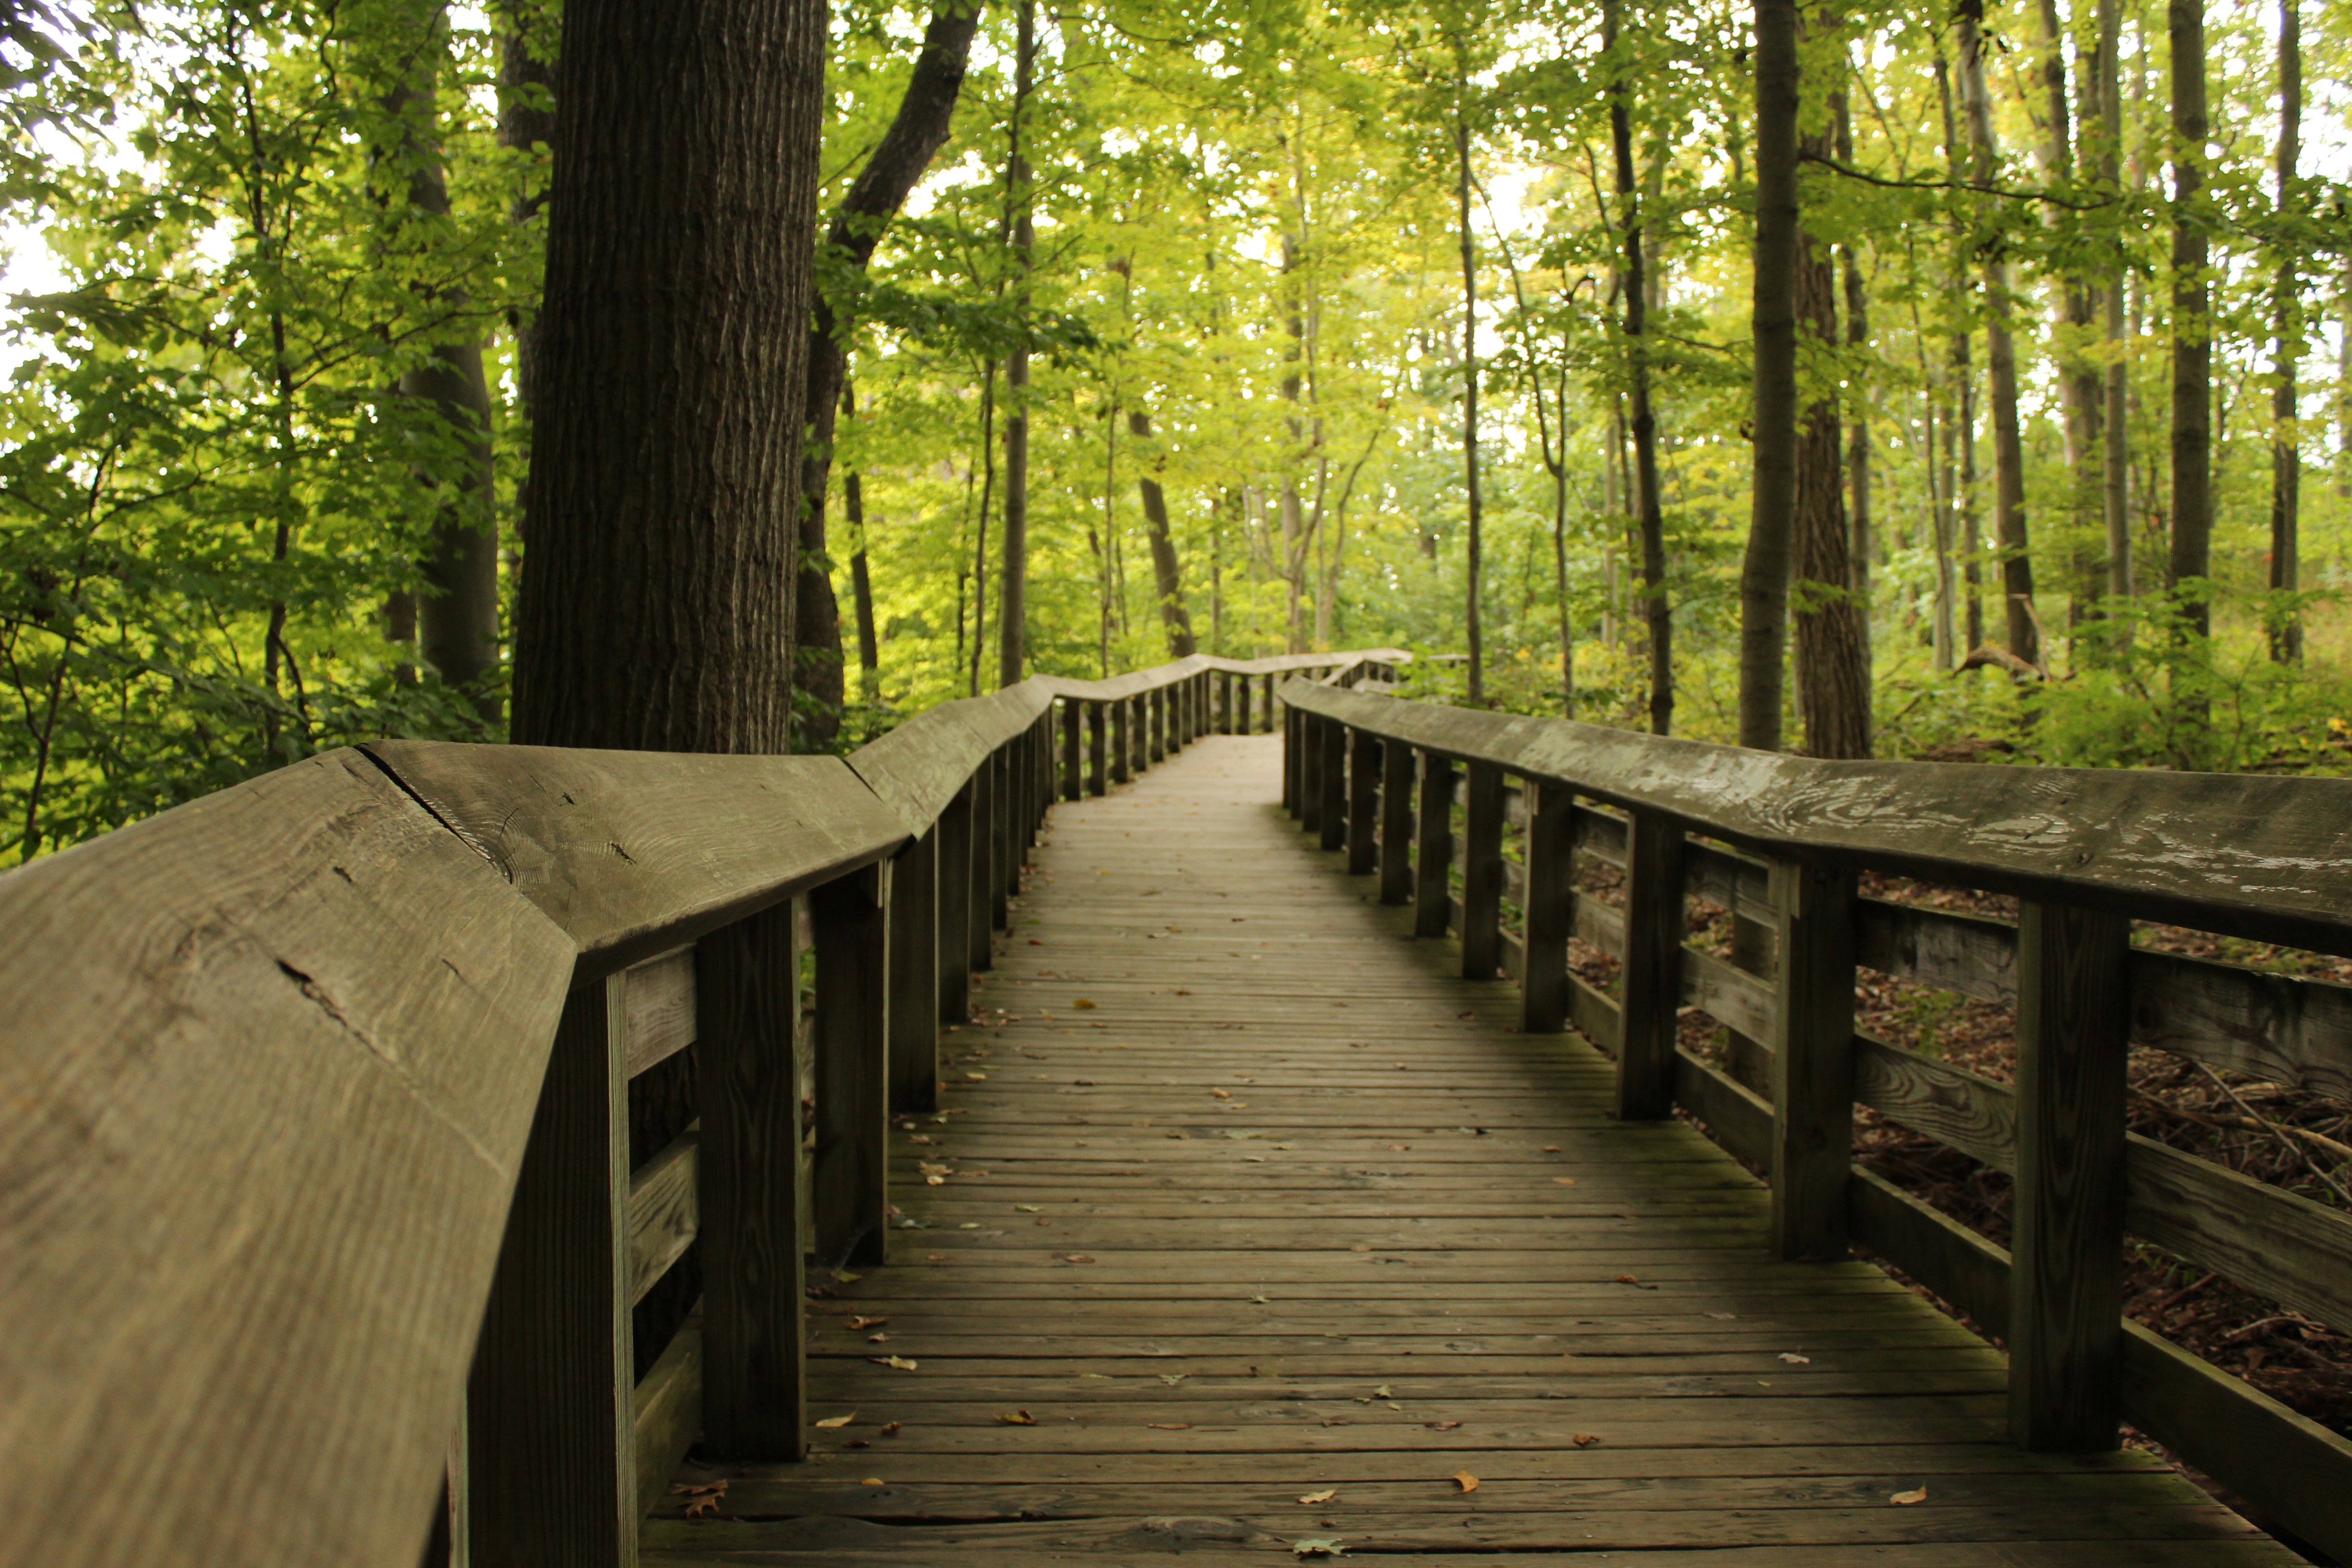 Ohio Wooden Surface Path Oak Trees Walkway 5184x3456